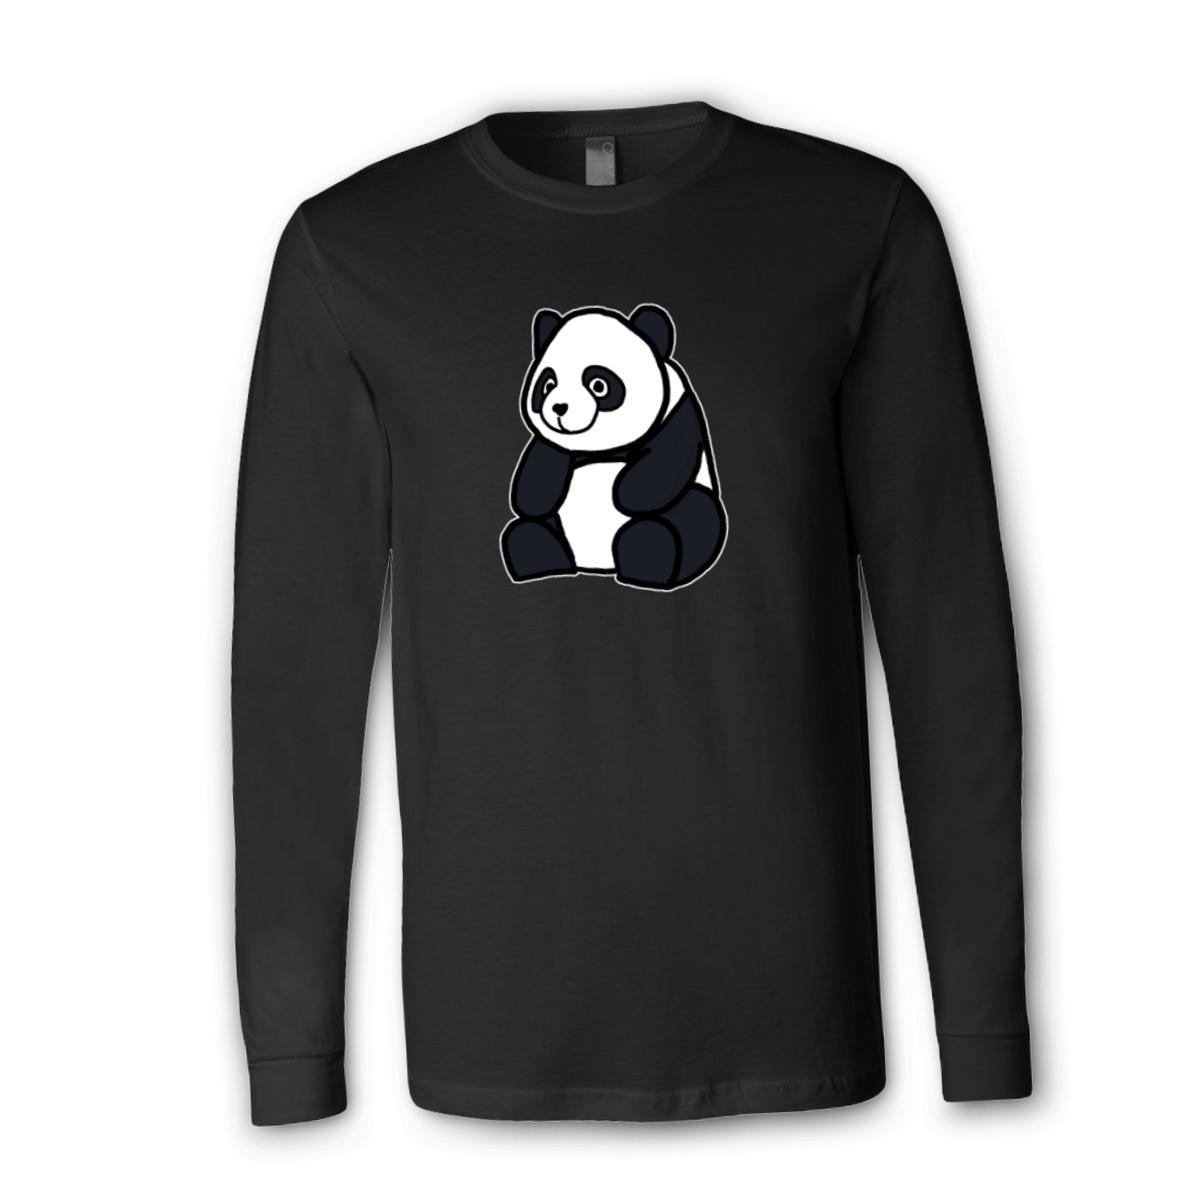 Panda Unisex Long Sleeve Tee Small black